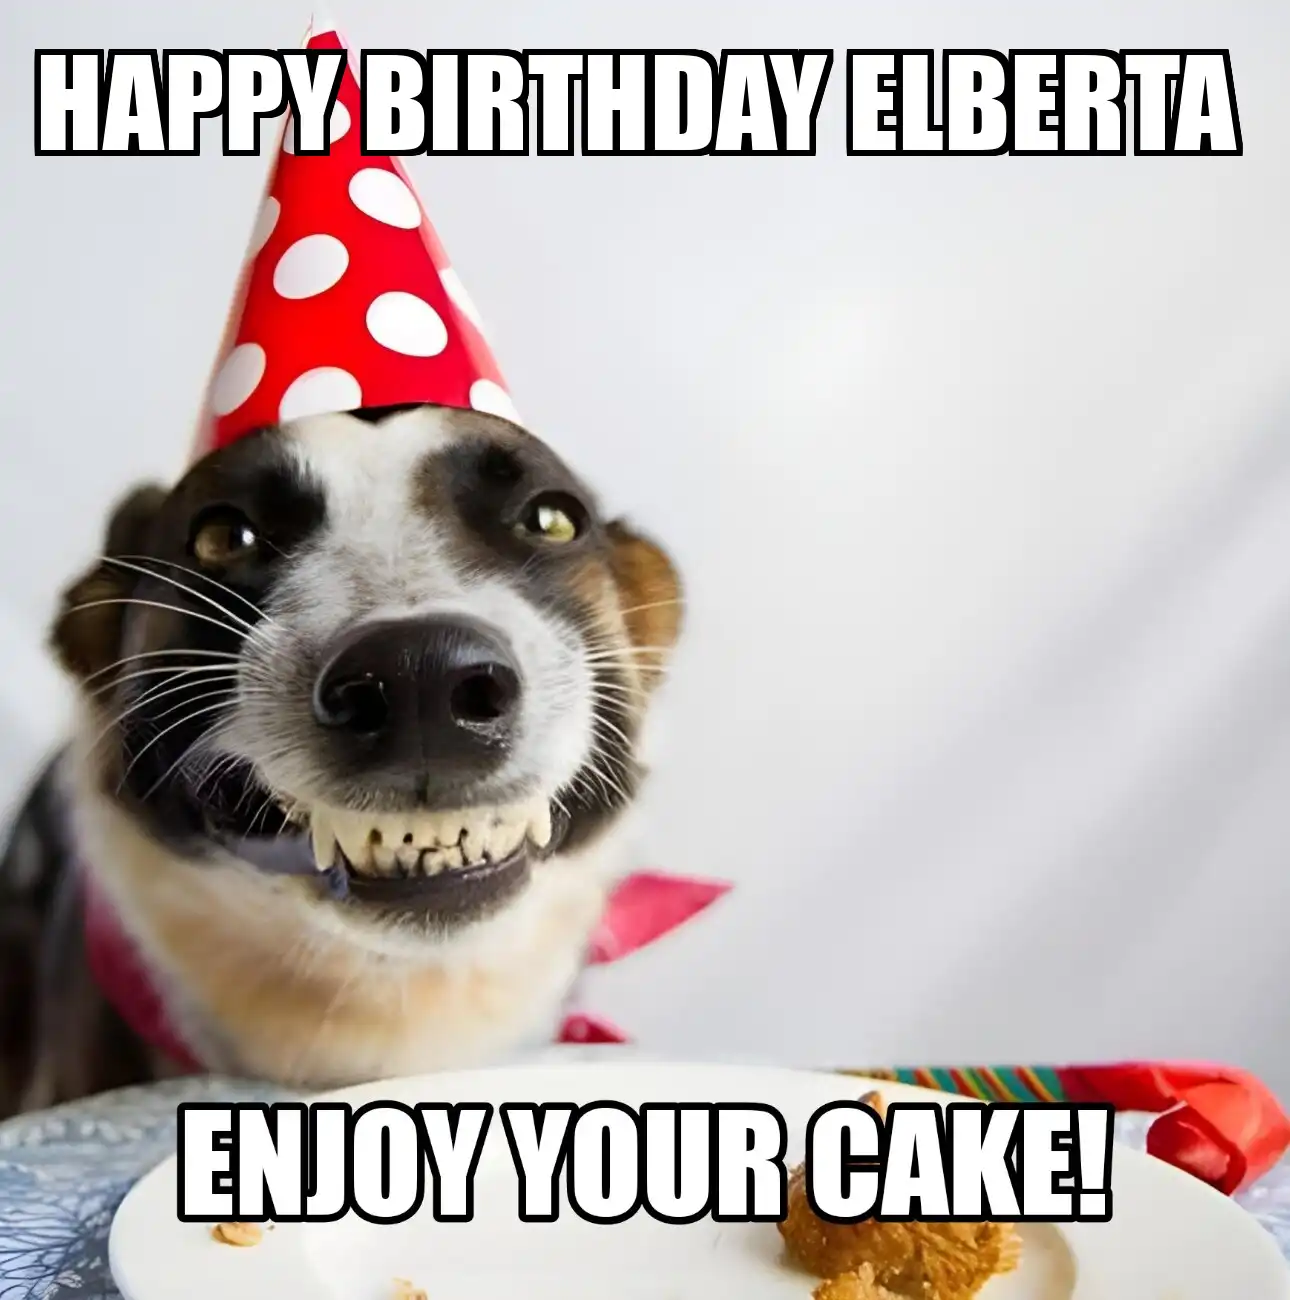 Happy Birthday Elberta Enjoy Your Cake Dog Meme